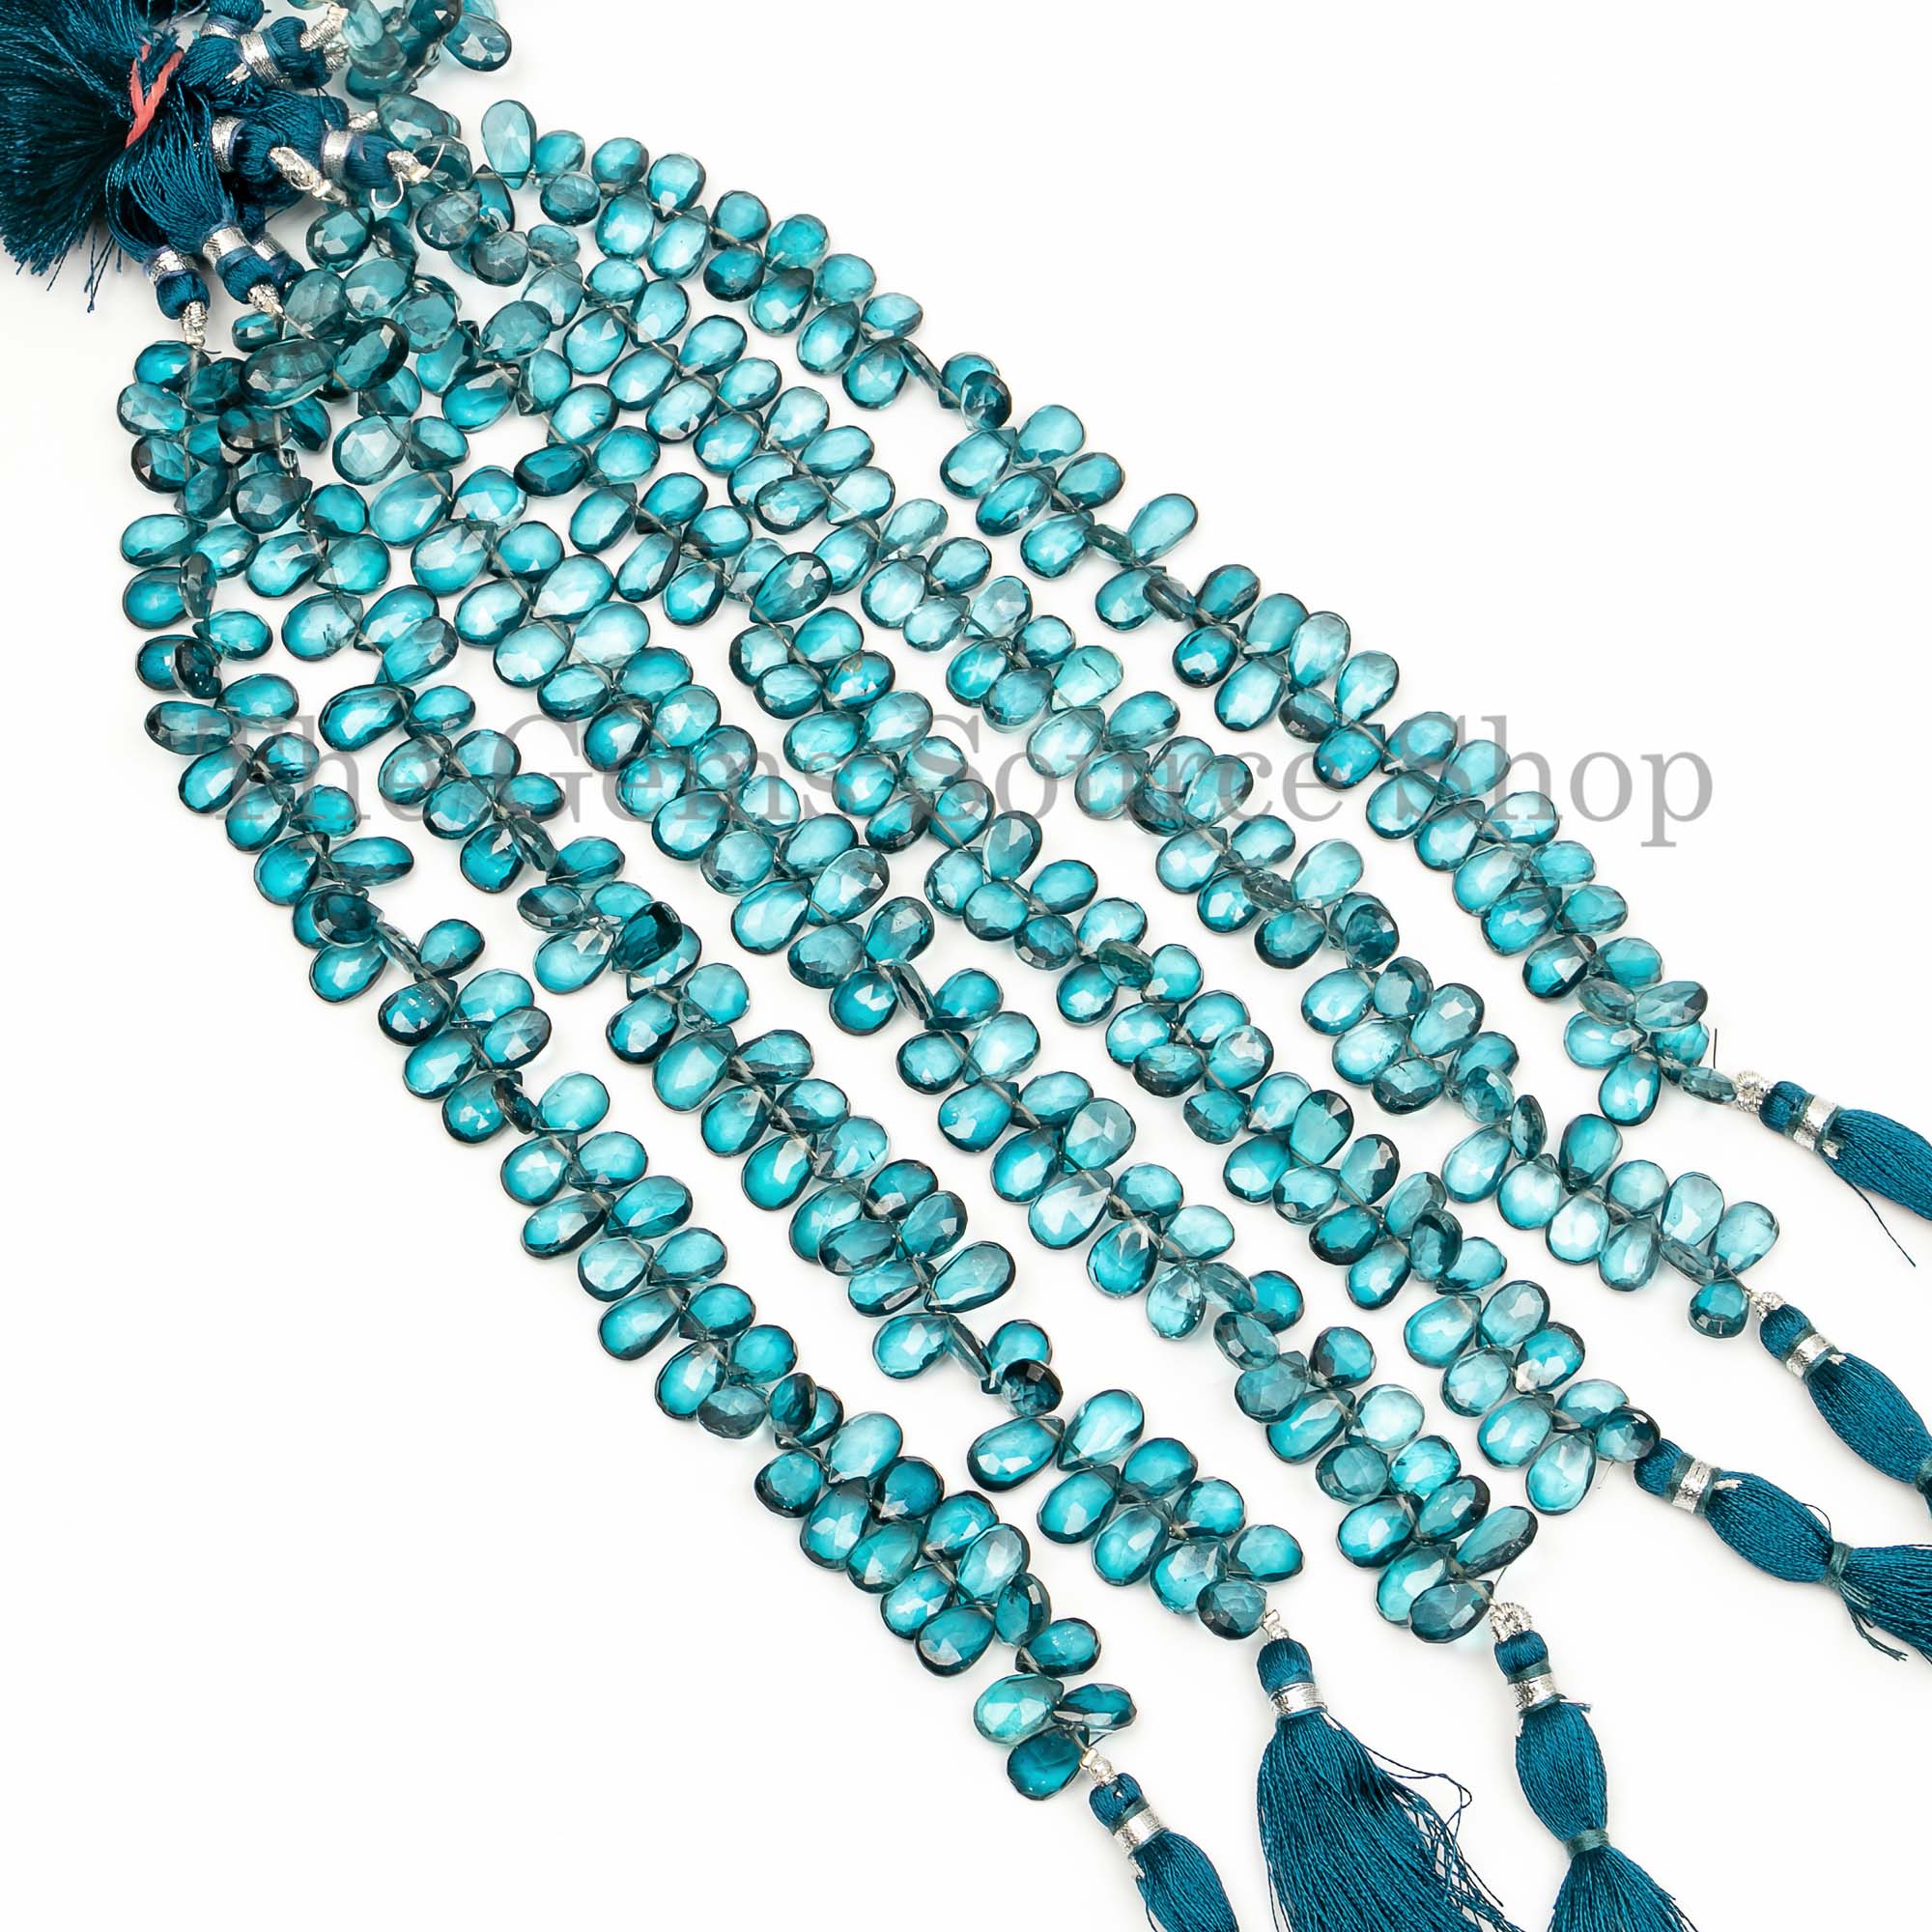 London Blue Coated Topaz Beads, Blue Topaz Pear Shape Beads, Side Drill Pear Beads, Gemstone Beads